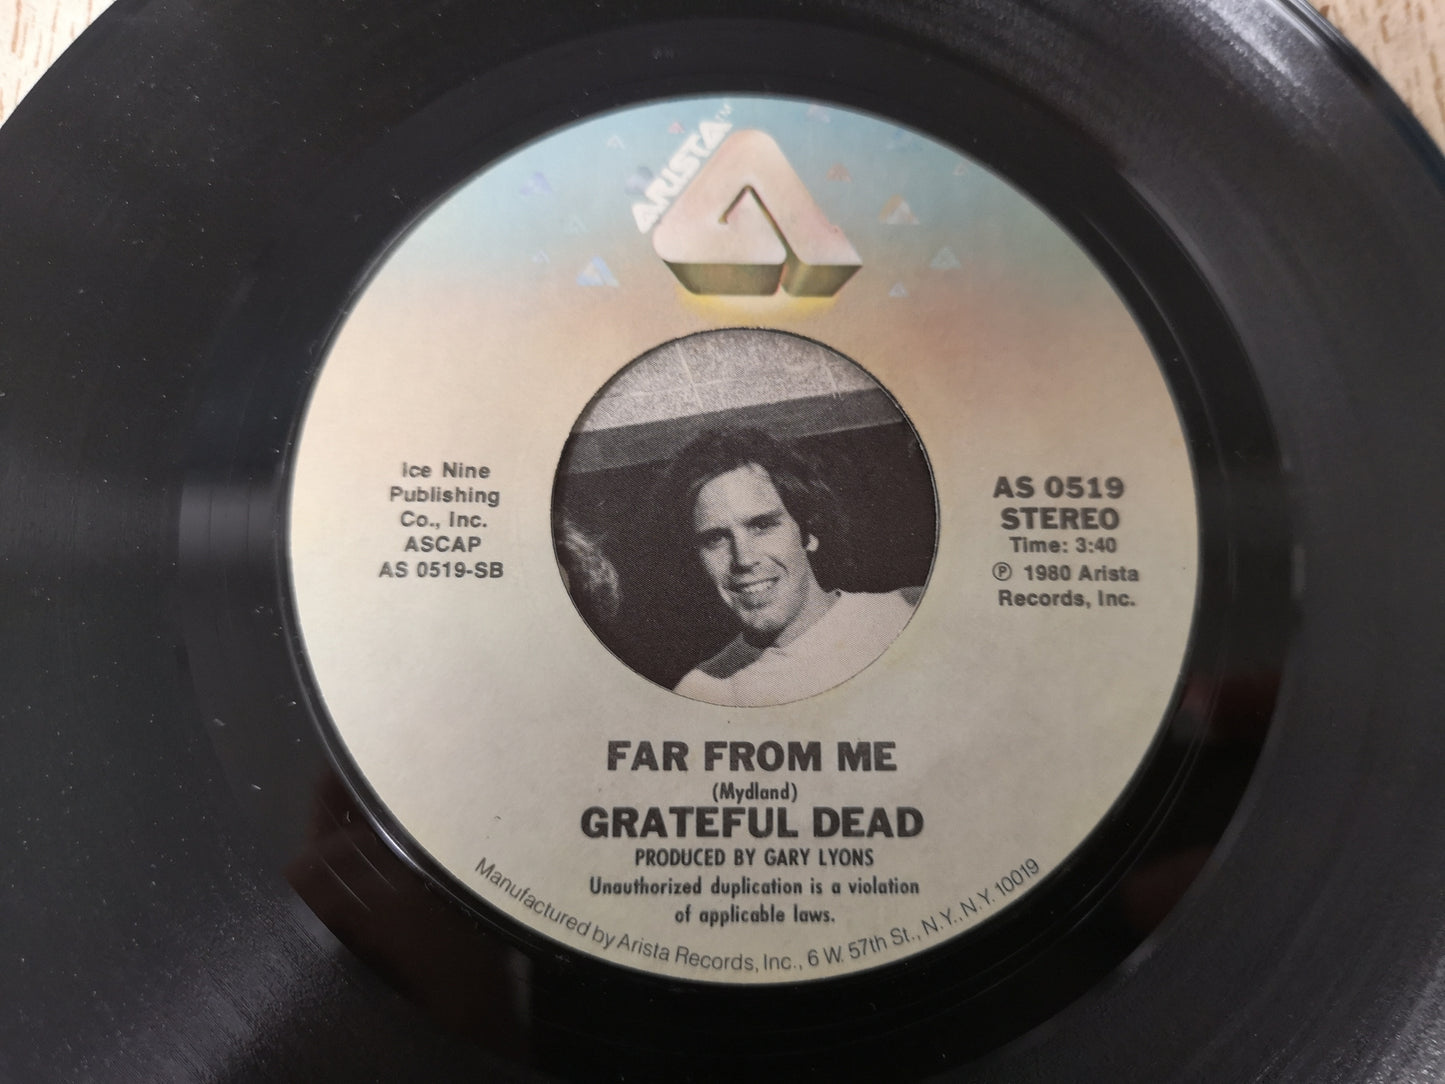 Grateful Dead "Alabama Getaway" Orig US 1980 VG++/M- (7" Single)